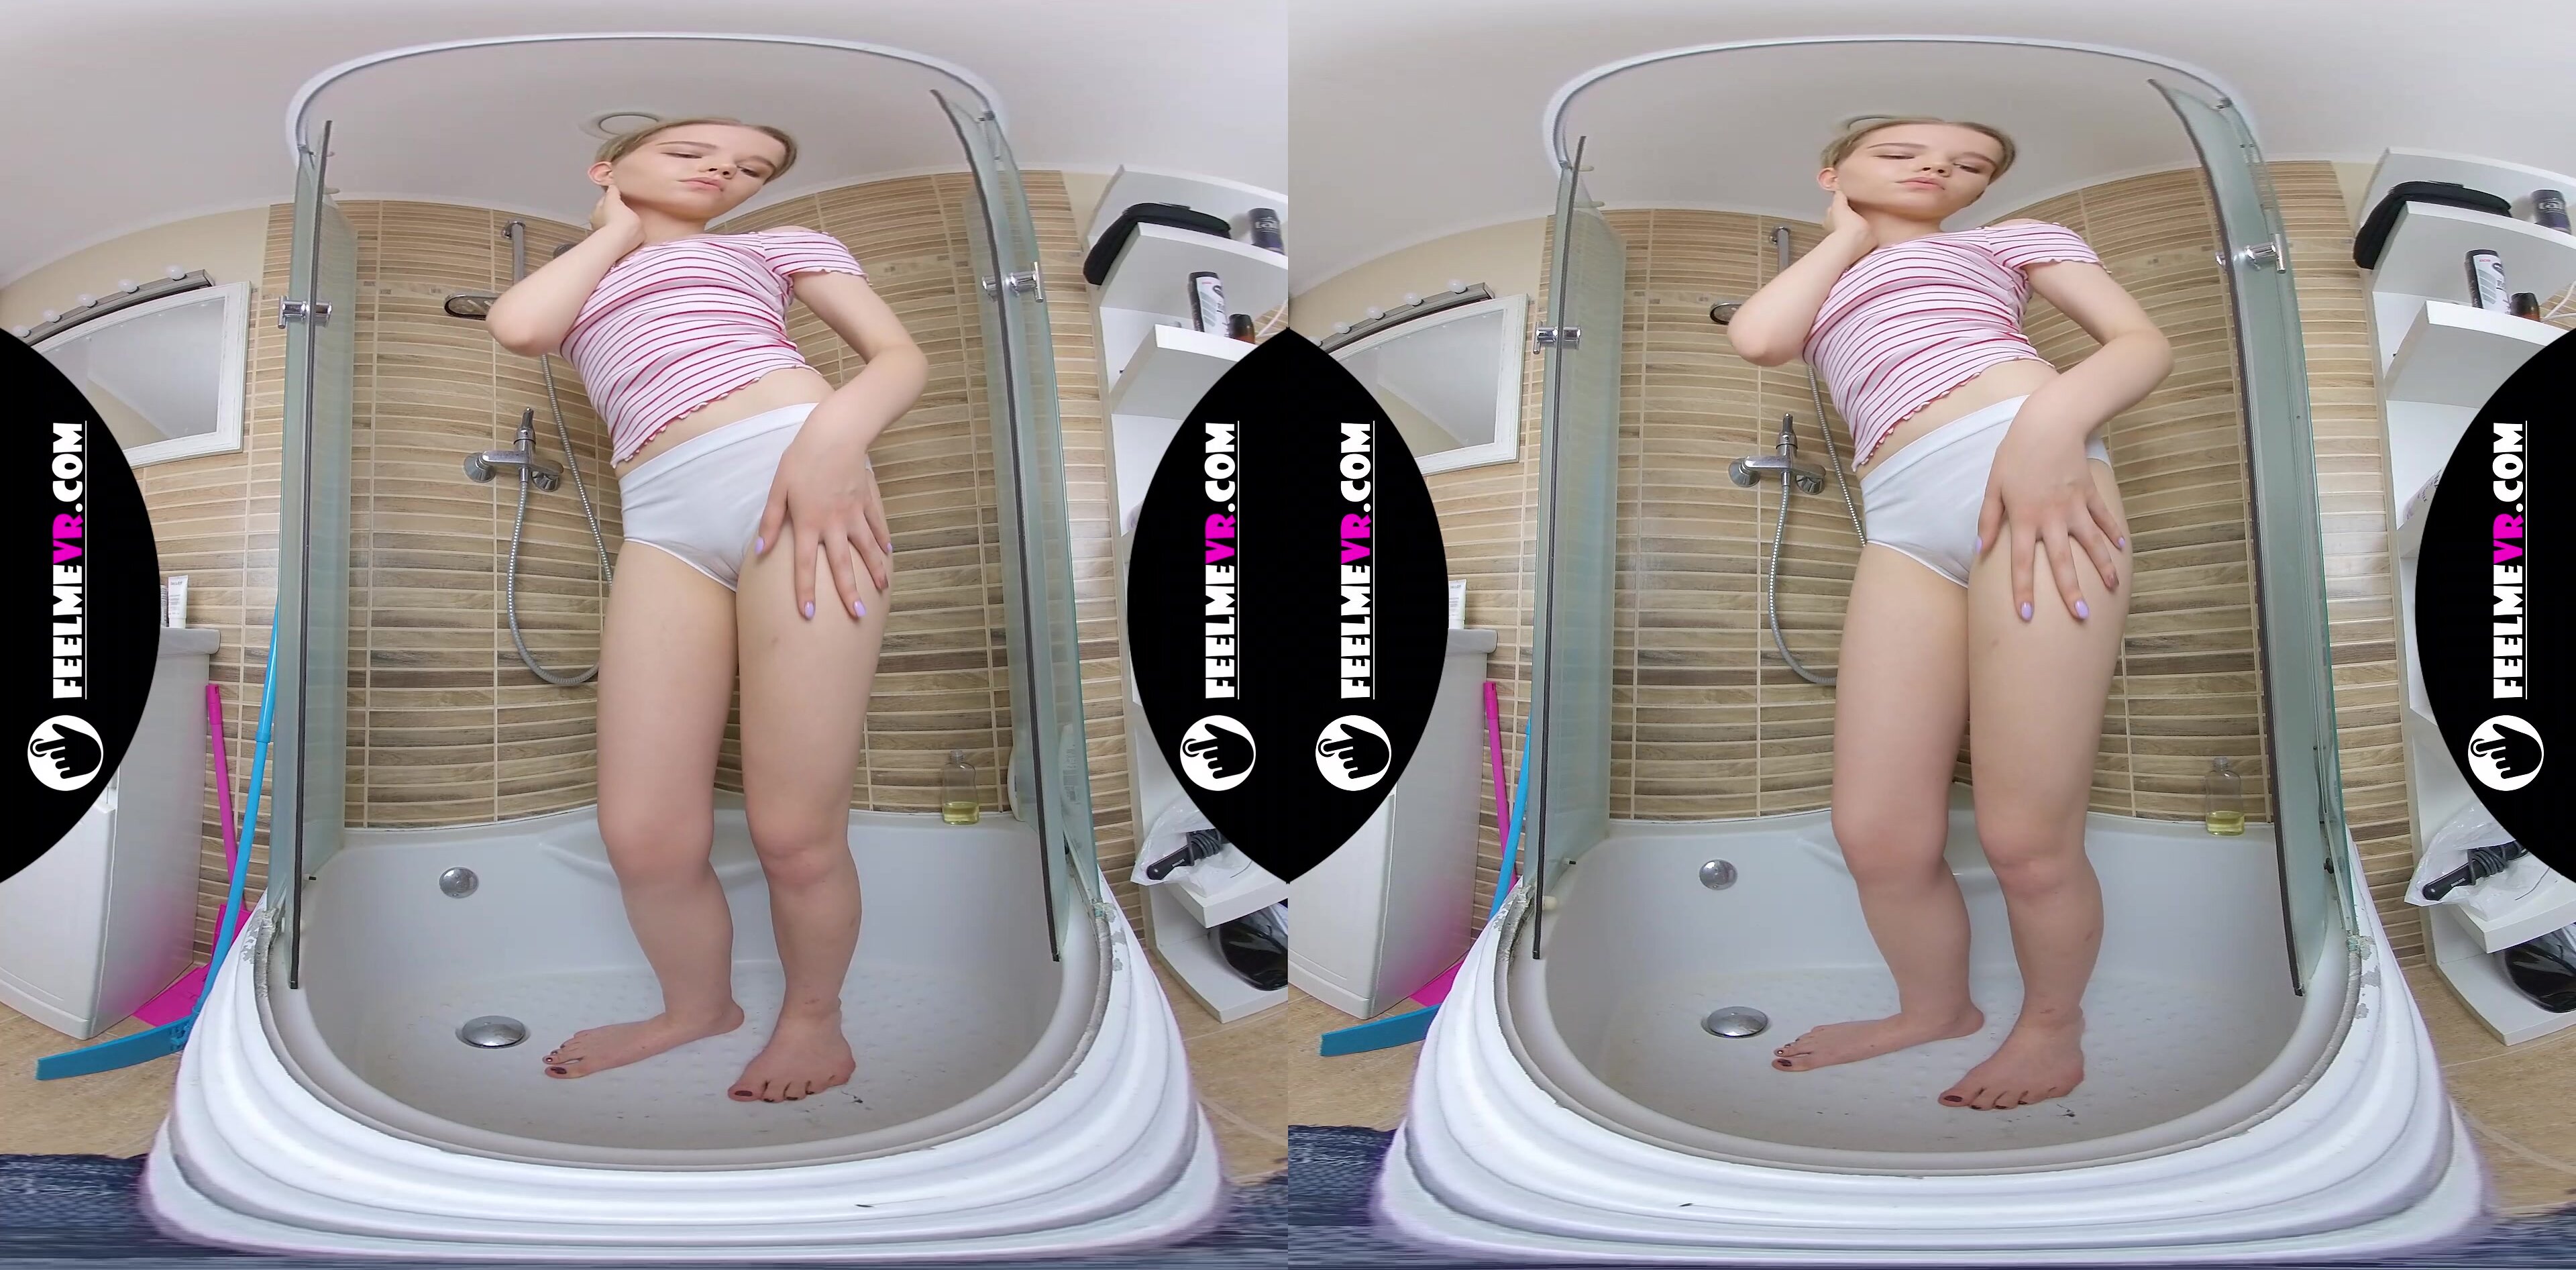 Juna lot oil on teenie titties and panties virtual reality